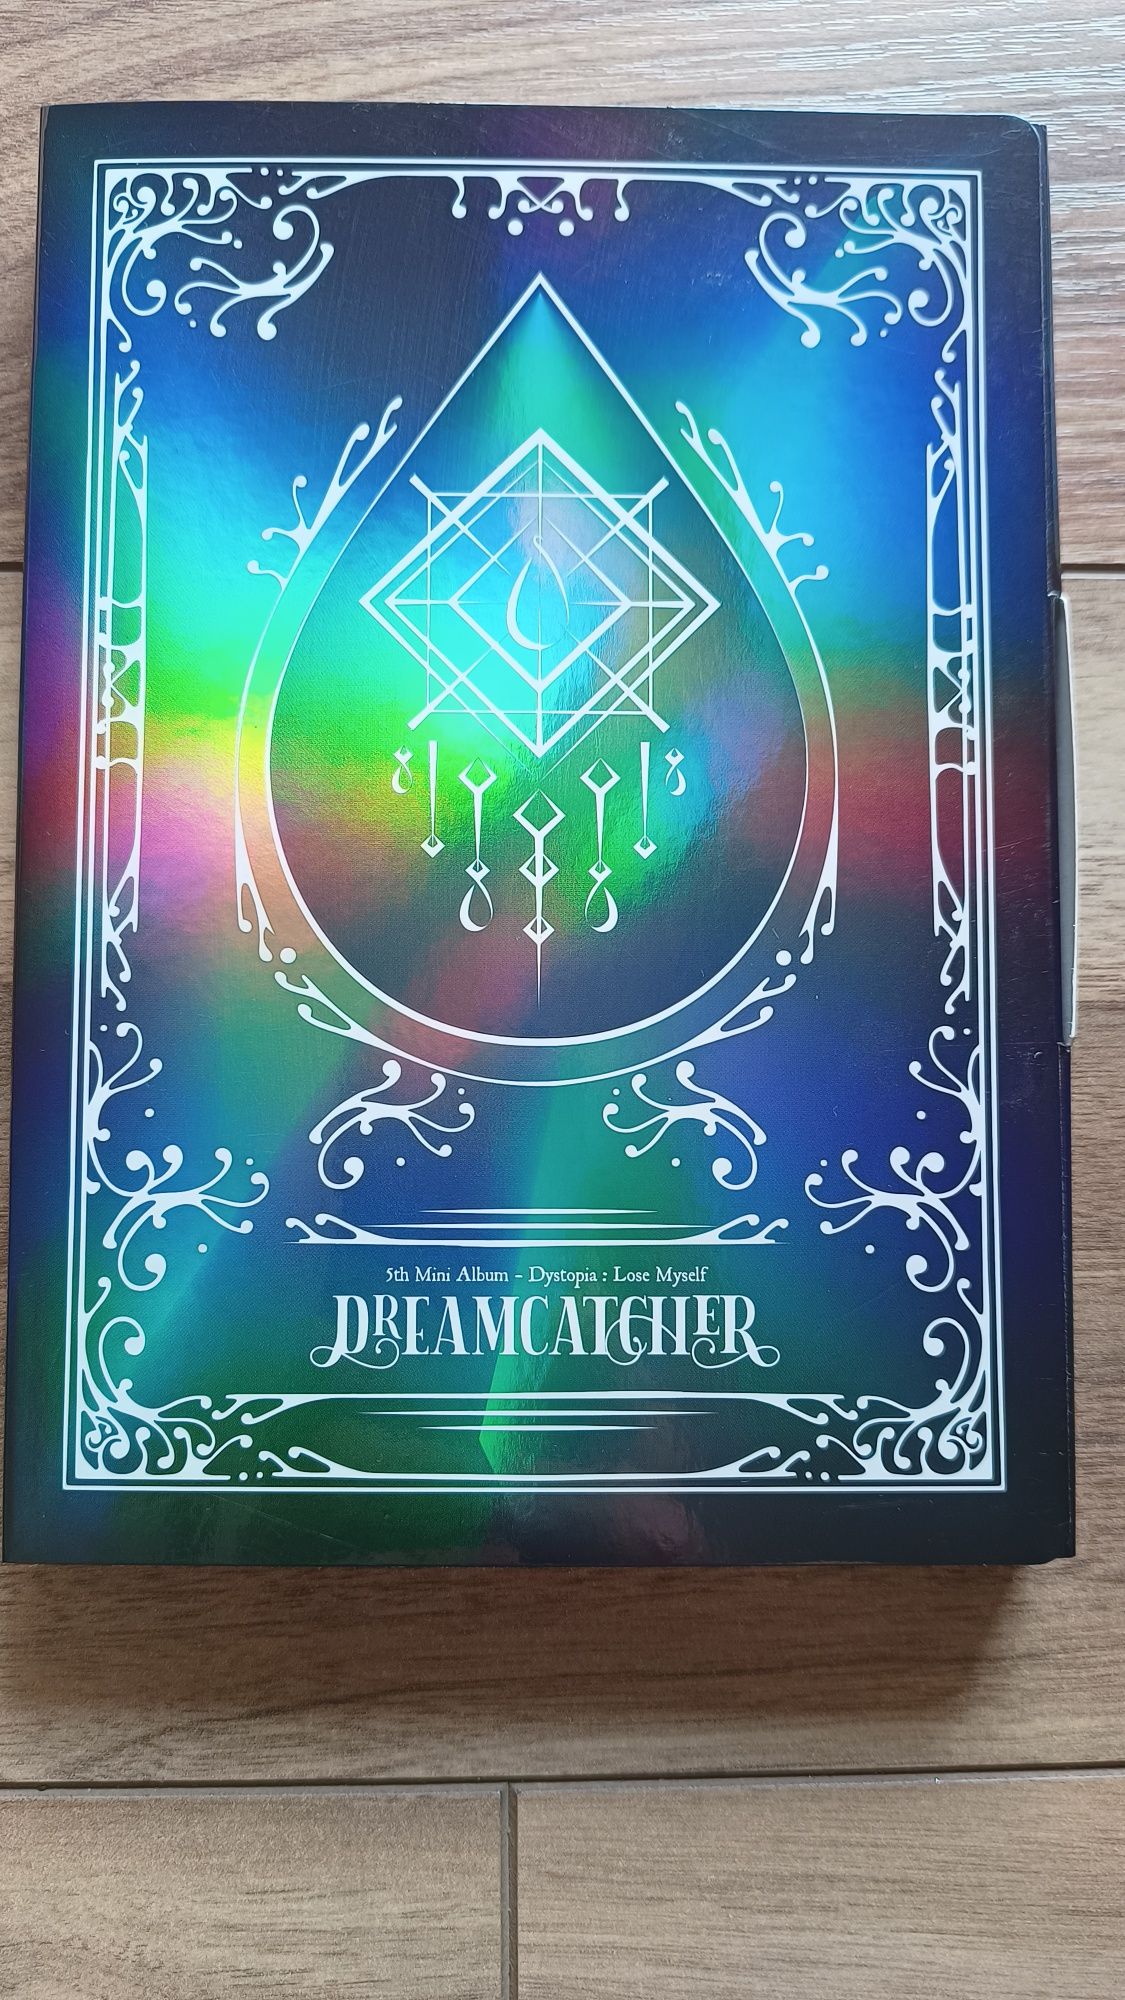 Dreamcatcher album 'Dystopia: Lose Myself' bez kart